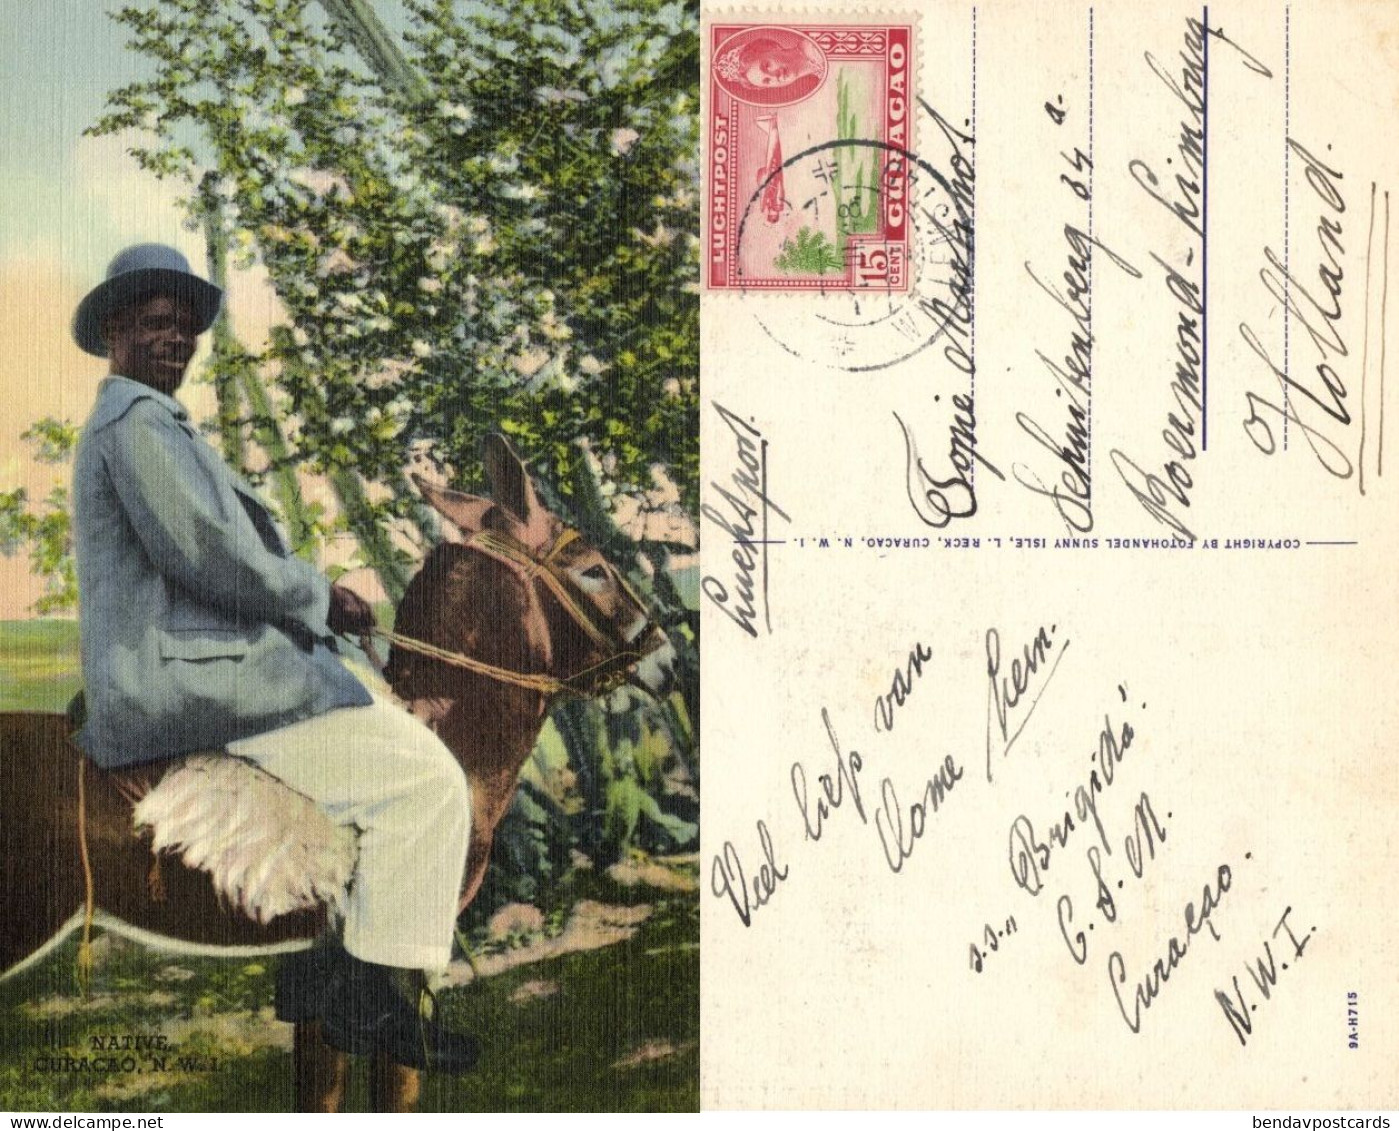 Curacao, N.W.I., Man On Horse Or Donkey (1948) Postcard - Curaçao